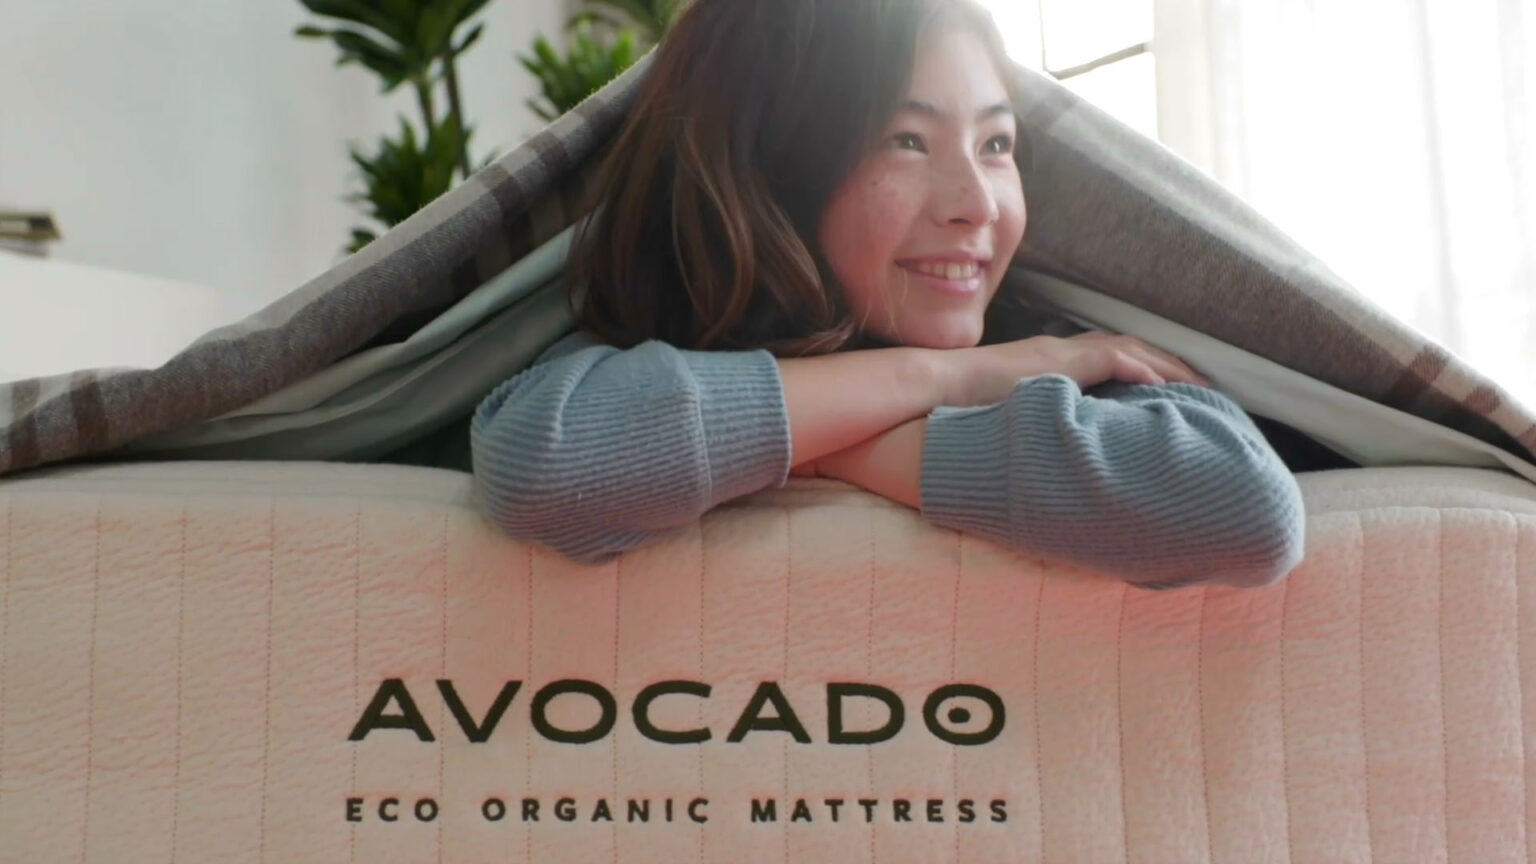 Avocado Mattress customer reviews